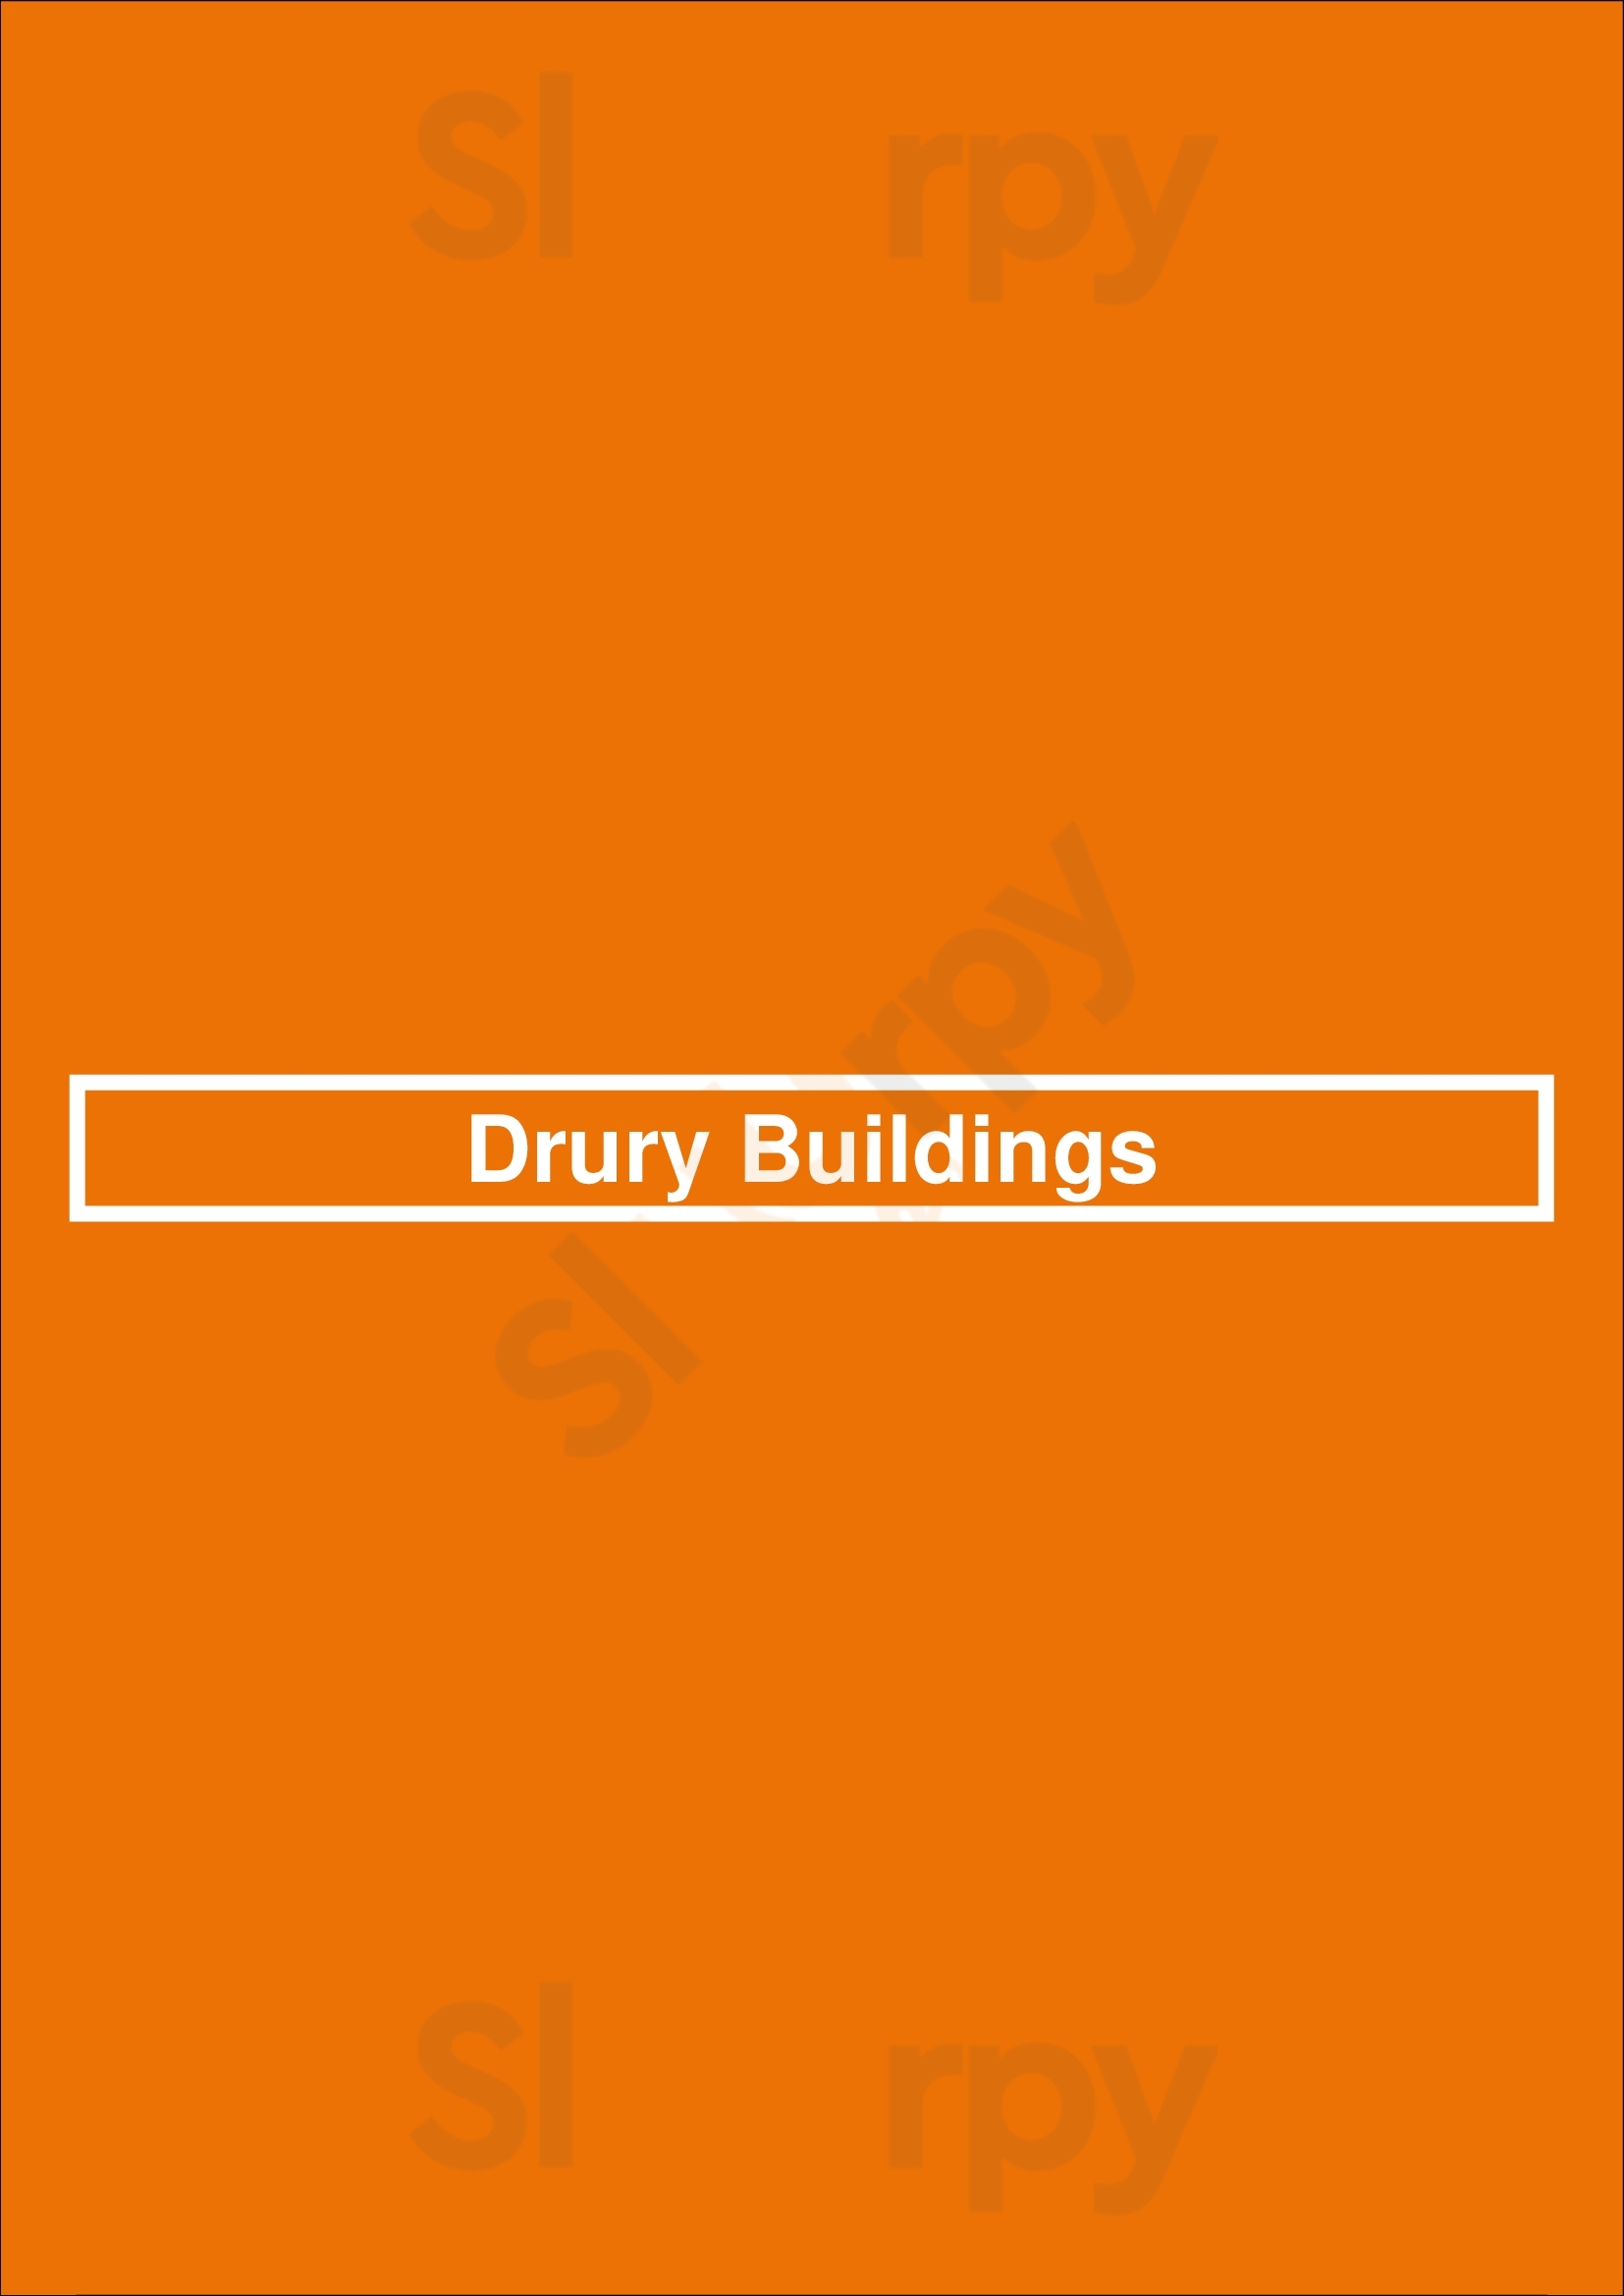 Drury Buildings Dublin Menu - 1